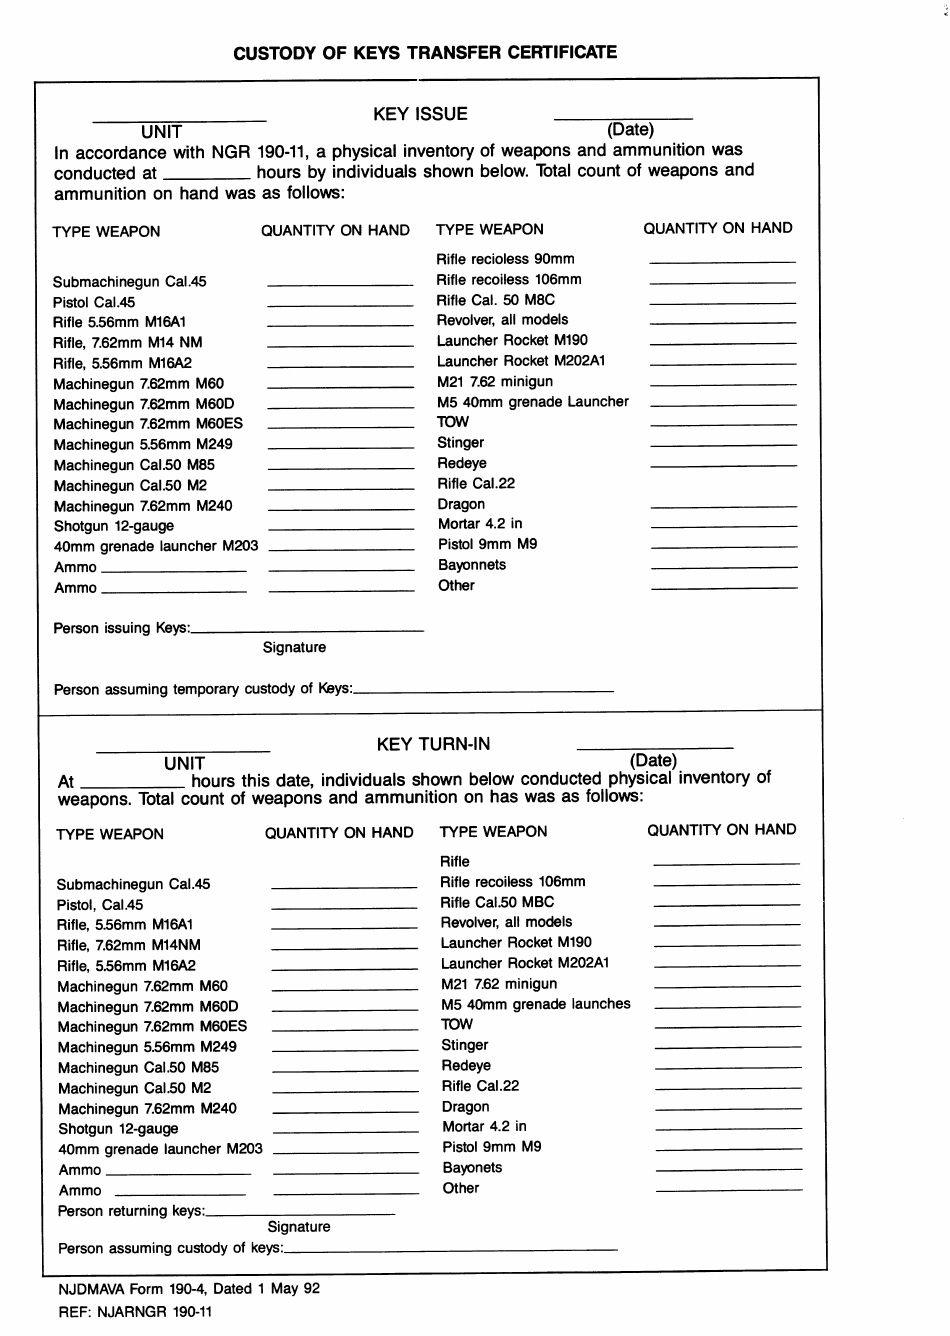 NJDMAVA Form 190-4 Custody of Keys Transfer Certificate - New Jersey, Page 1